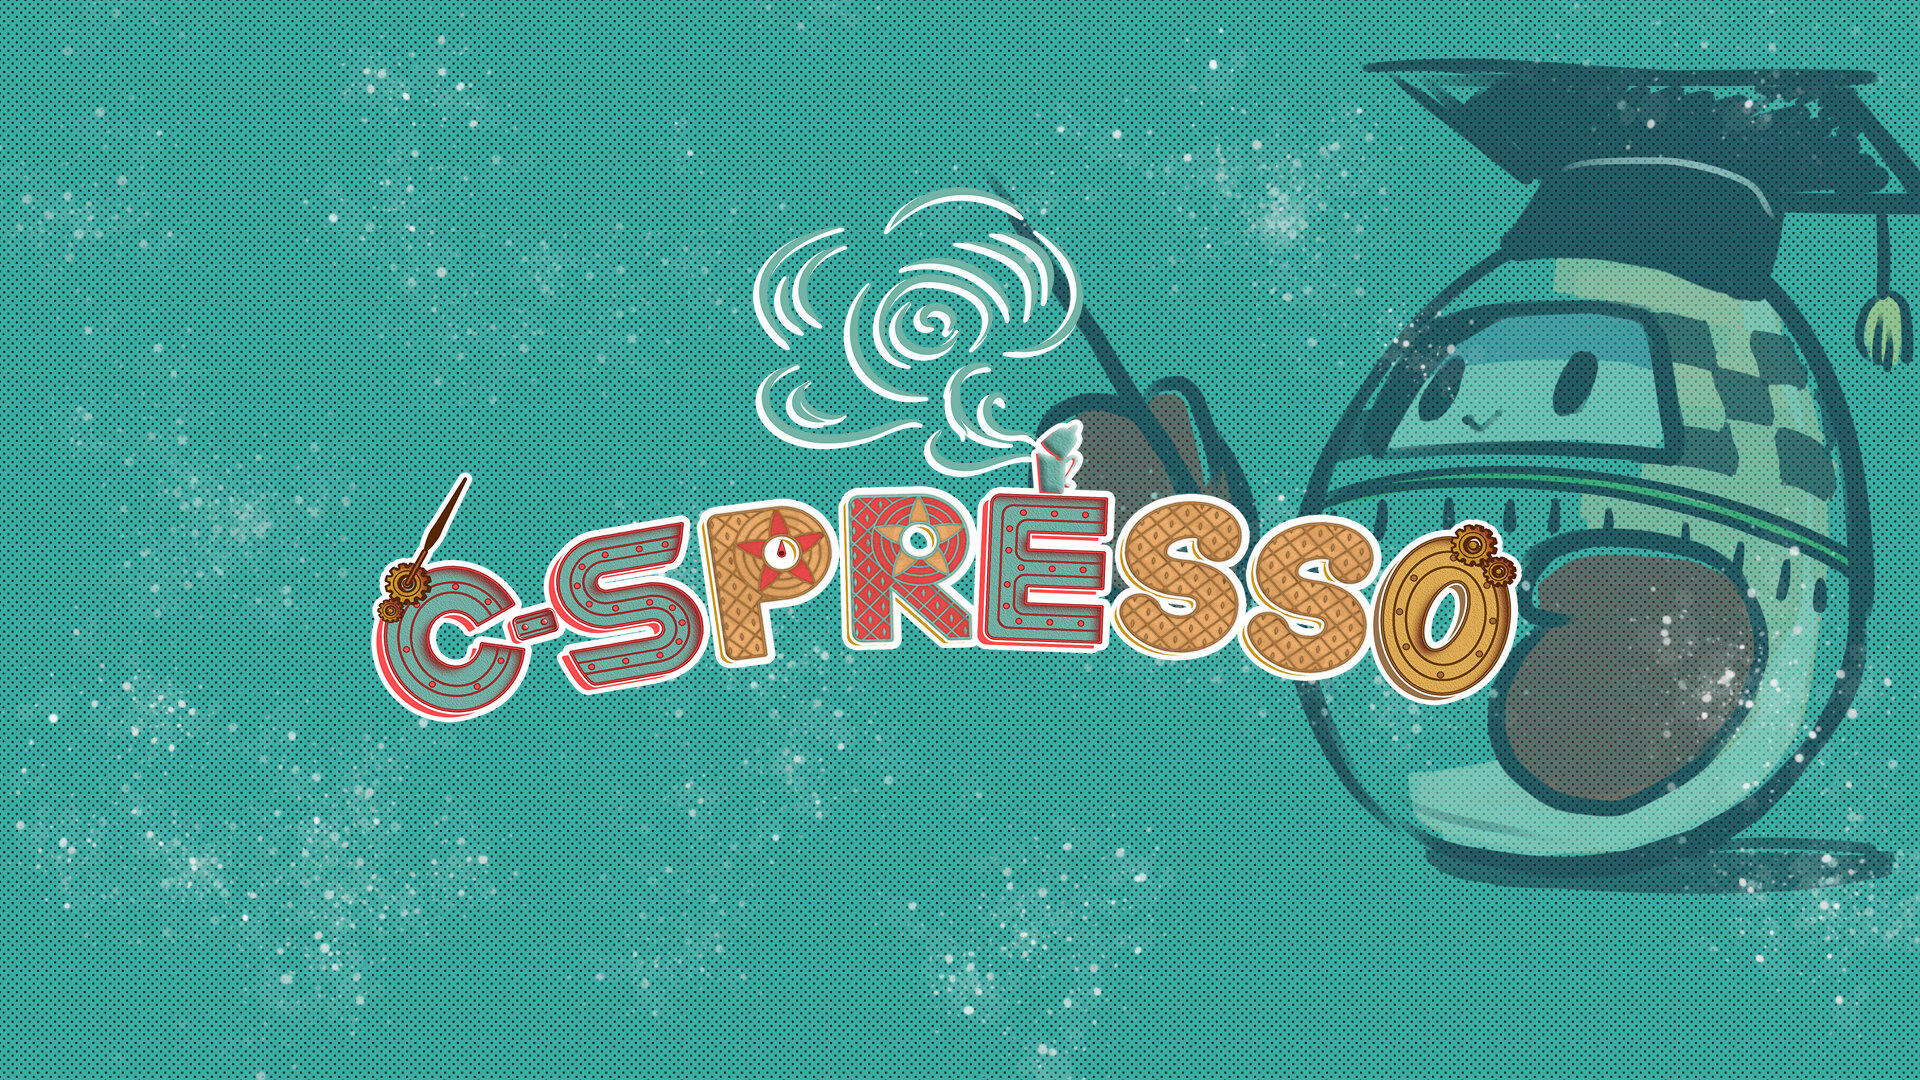 CSpresso_Poster.jpg